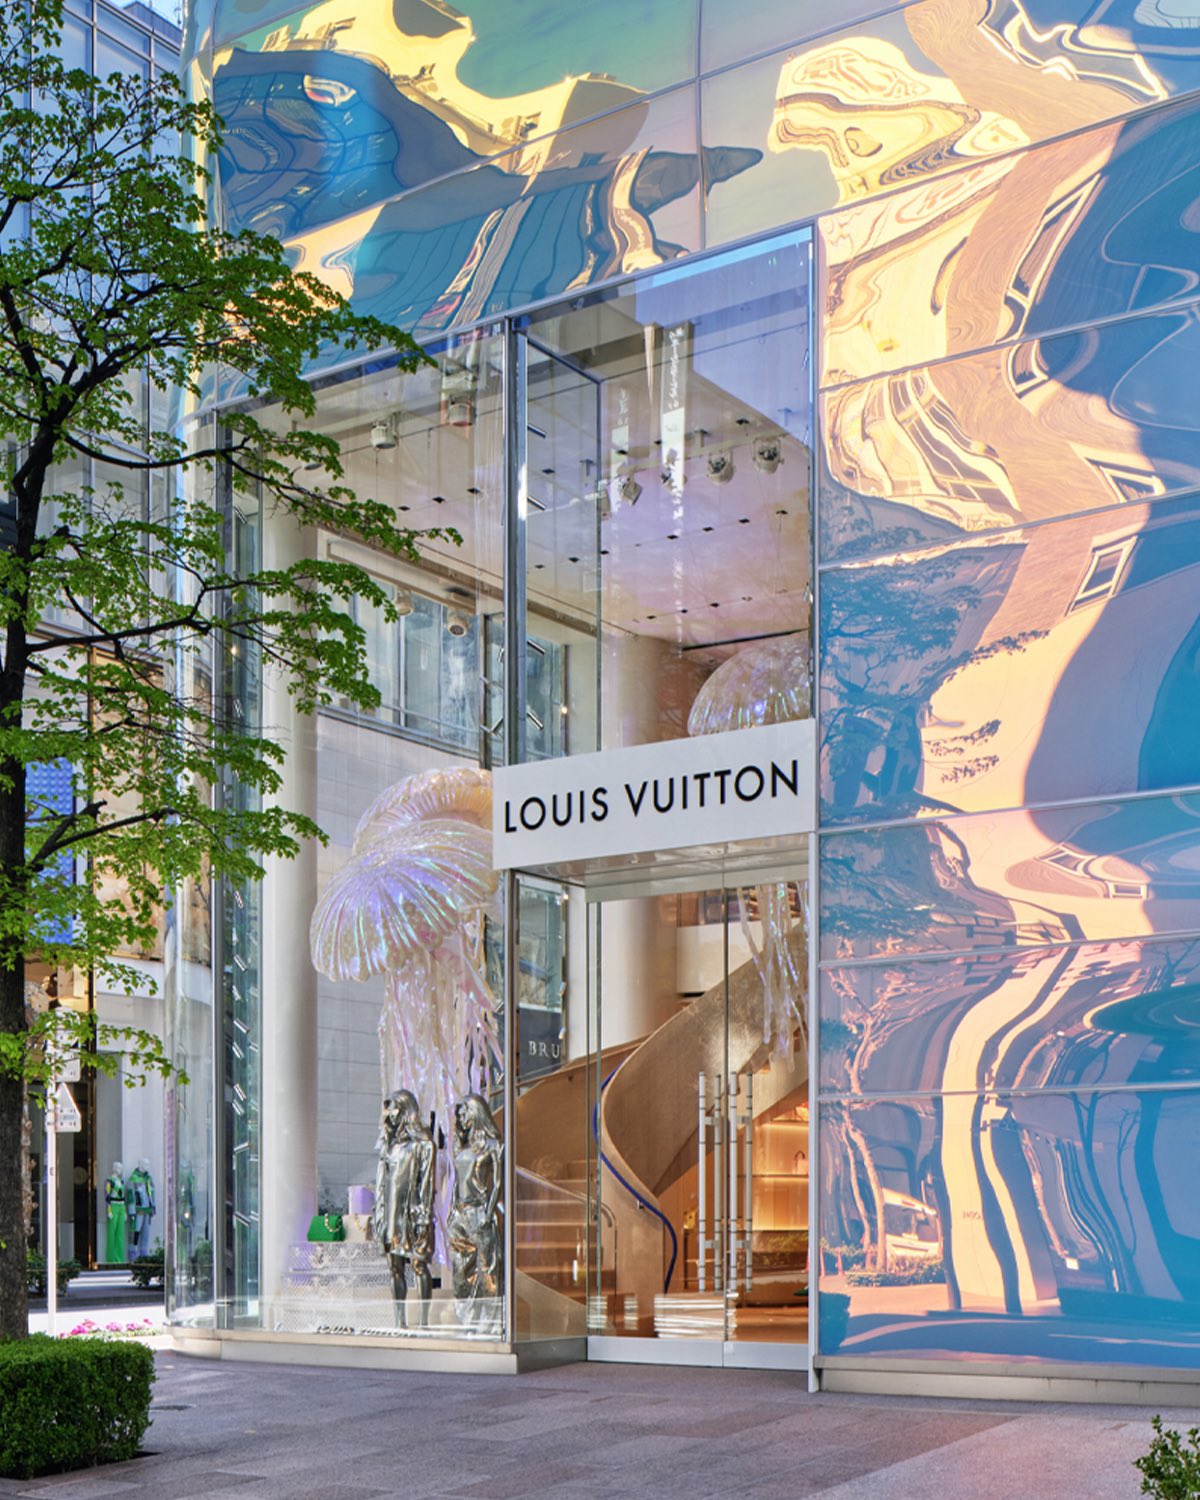 Outlander Magazine on X: Louis Vuitton's new 3D Billboard in